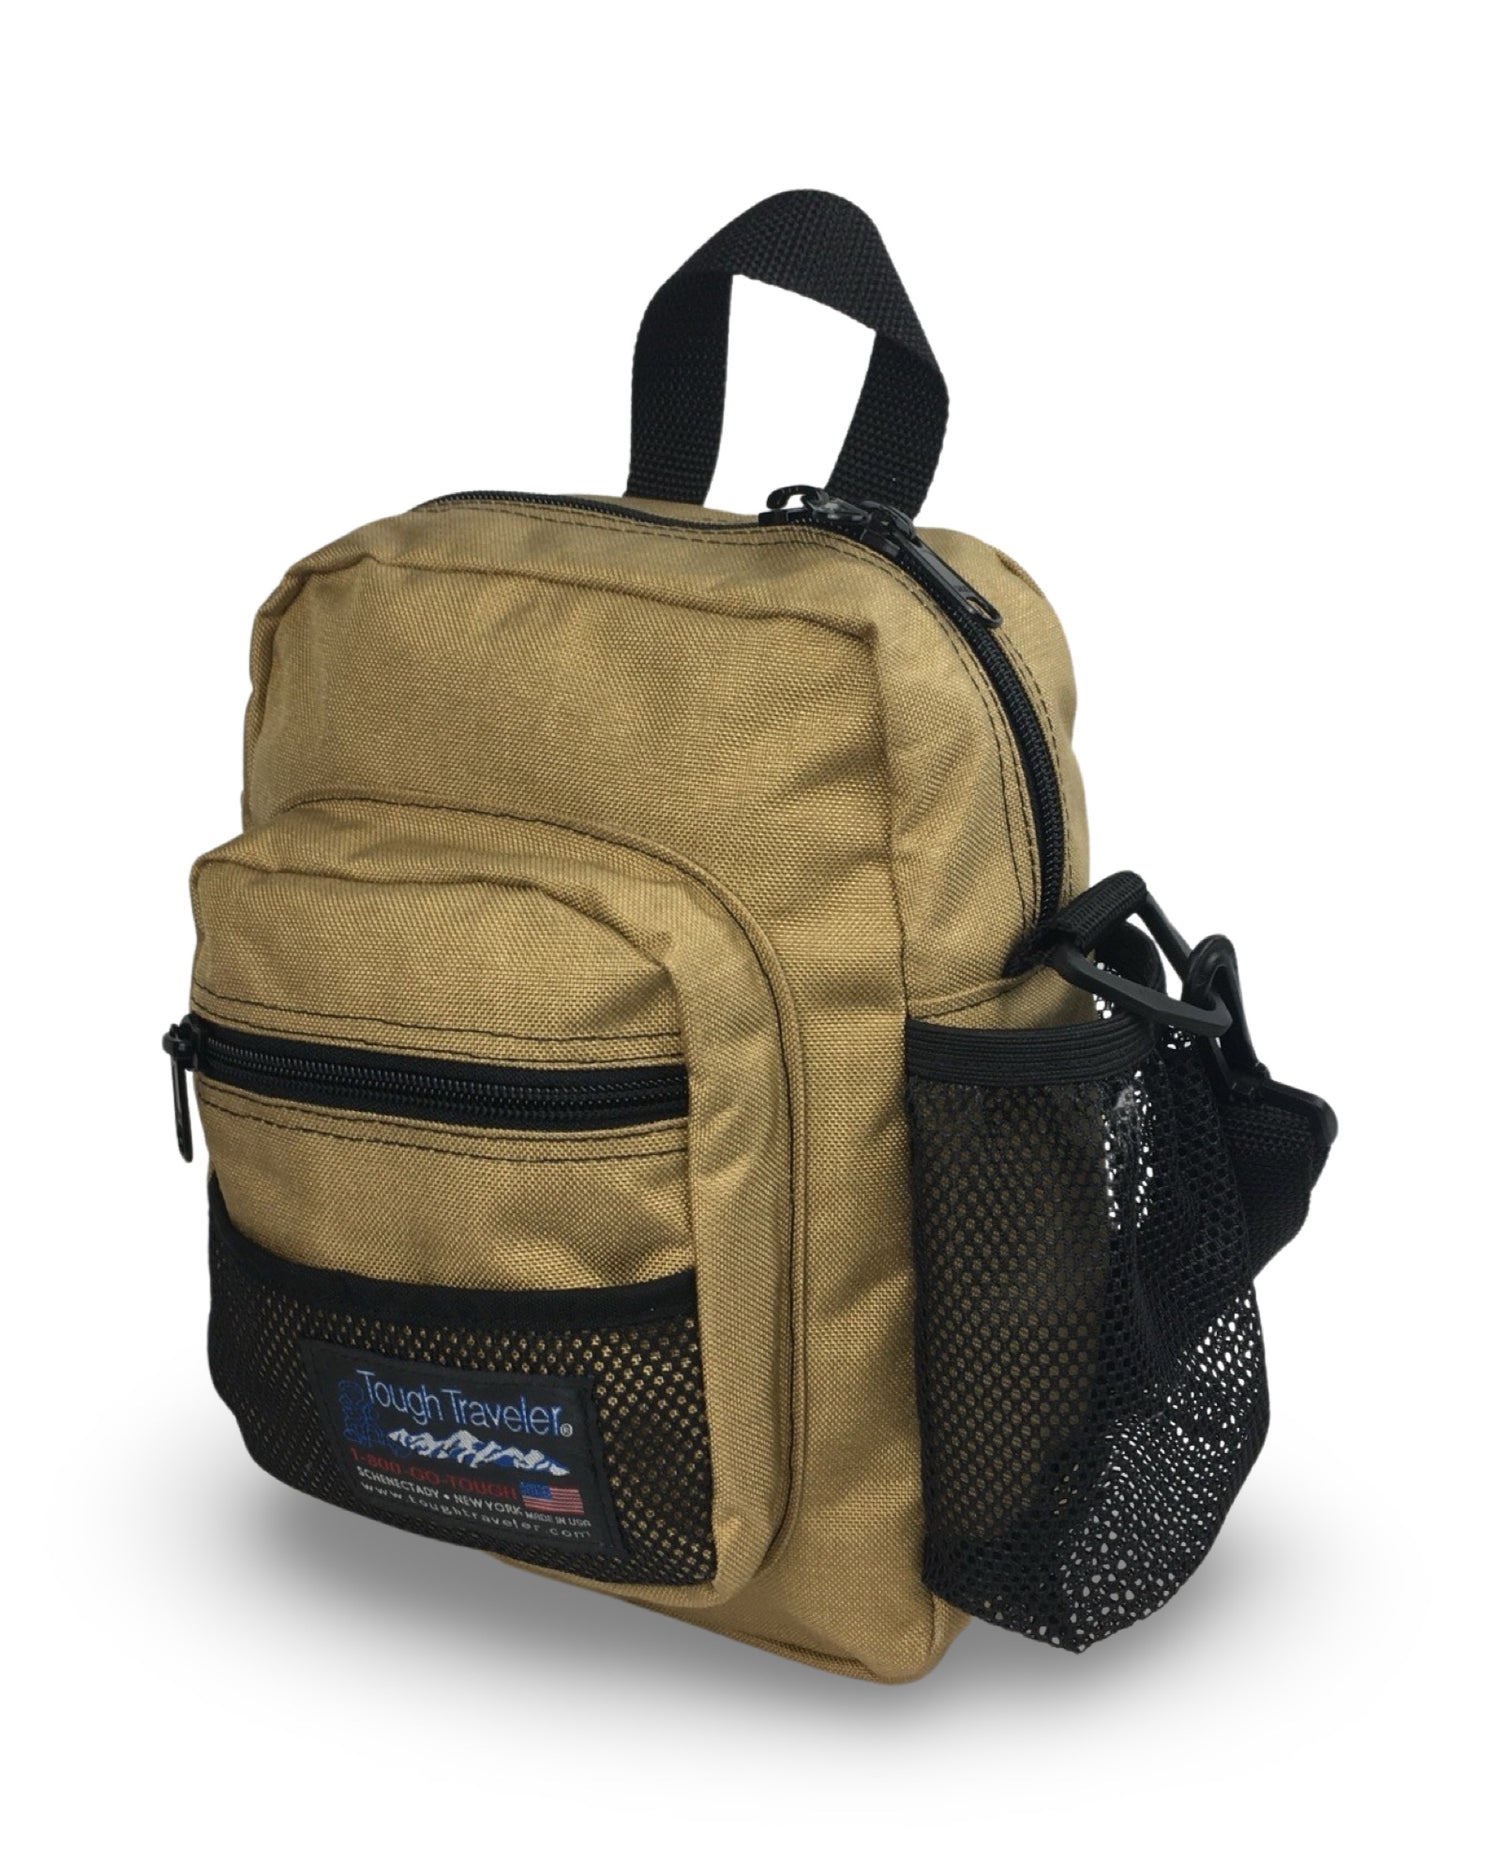 WAYFARER Shoulder Bags, by Tough Traveler. Made in USA since 1970